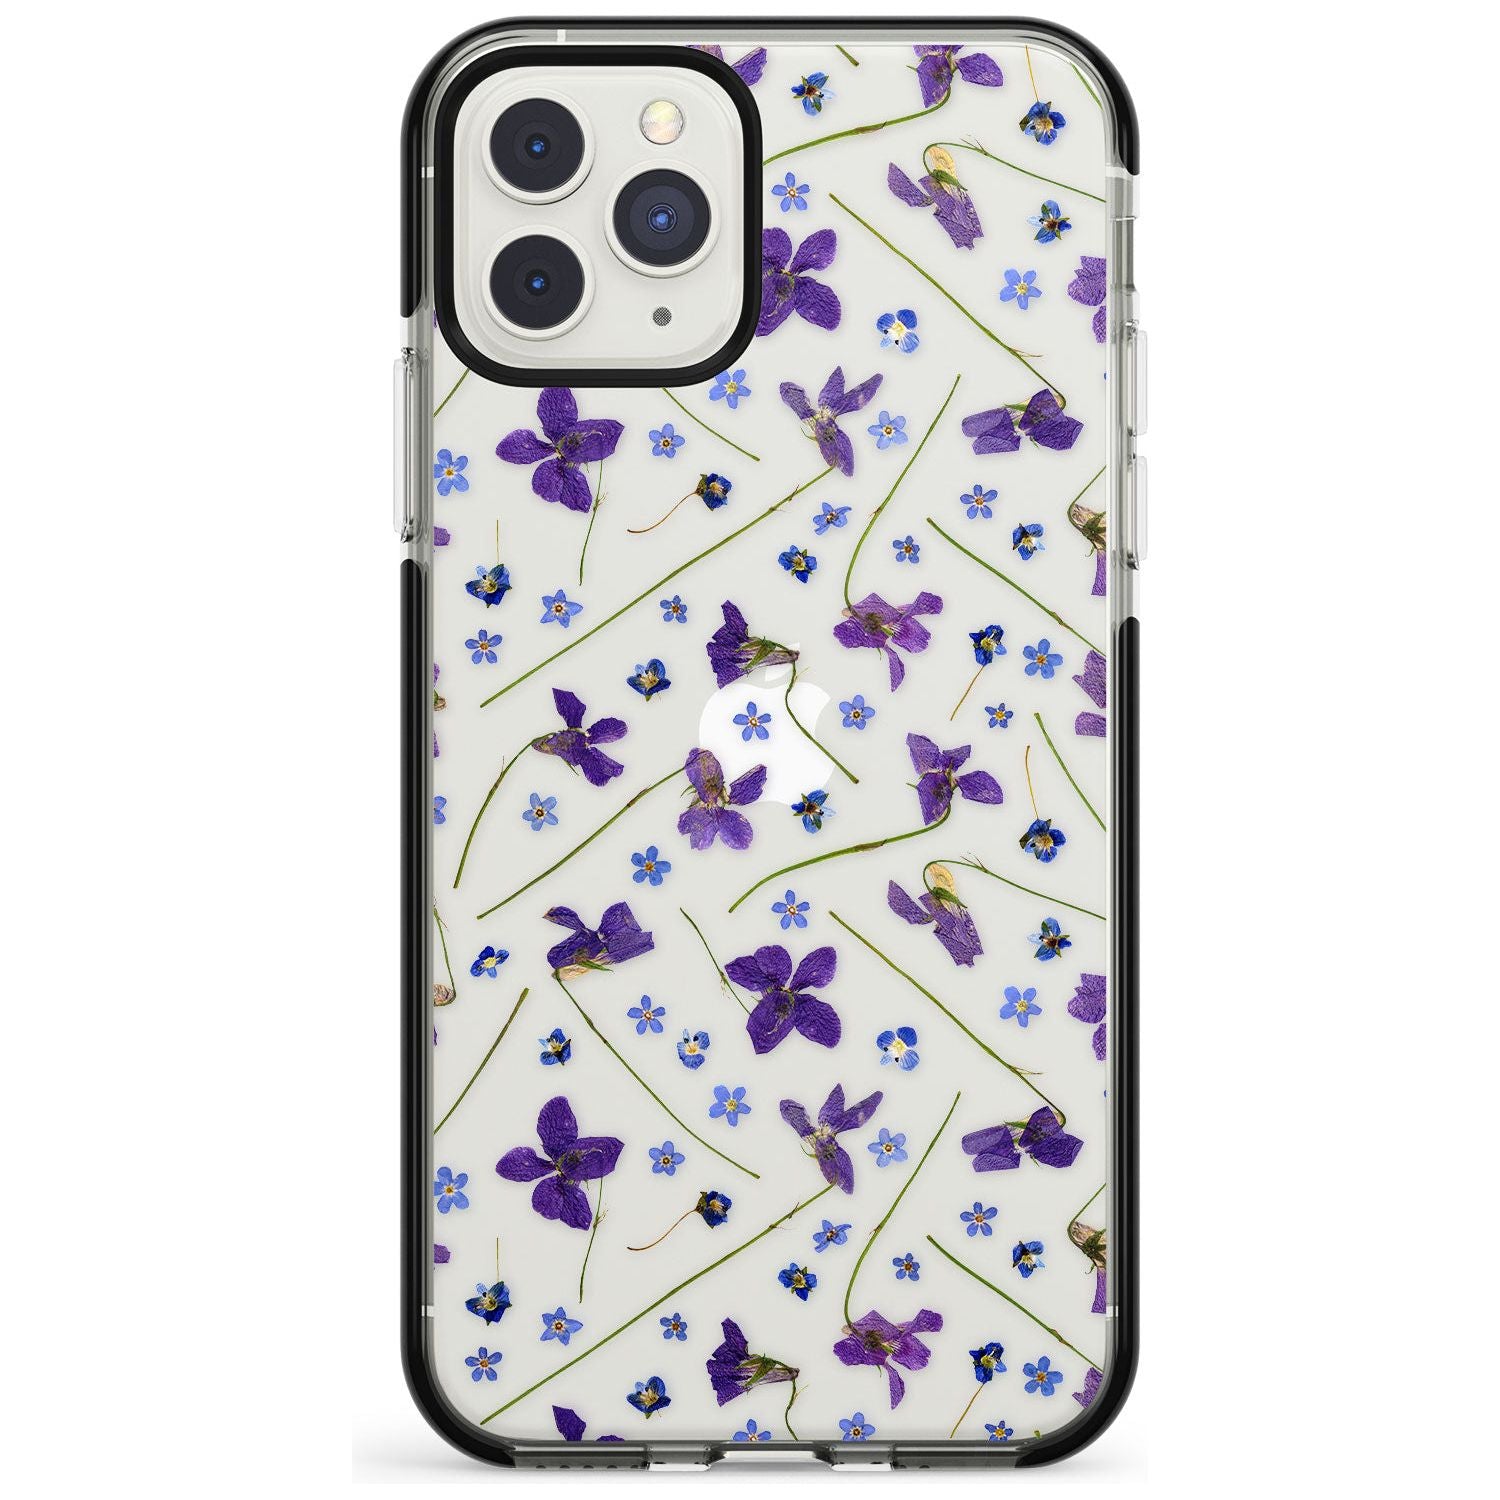 Violet & Blue Floral Pattern Design Black Impact Phone Case for iPhone 11 Pro Max